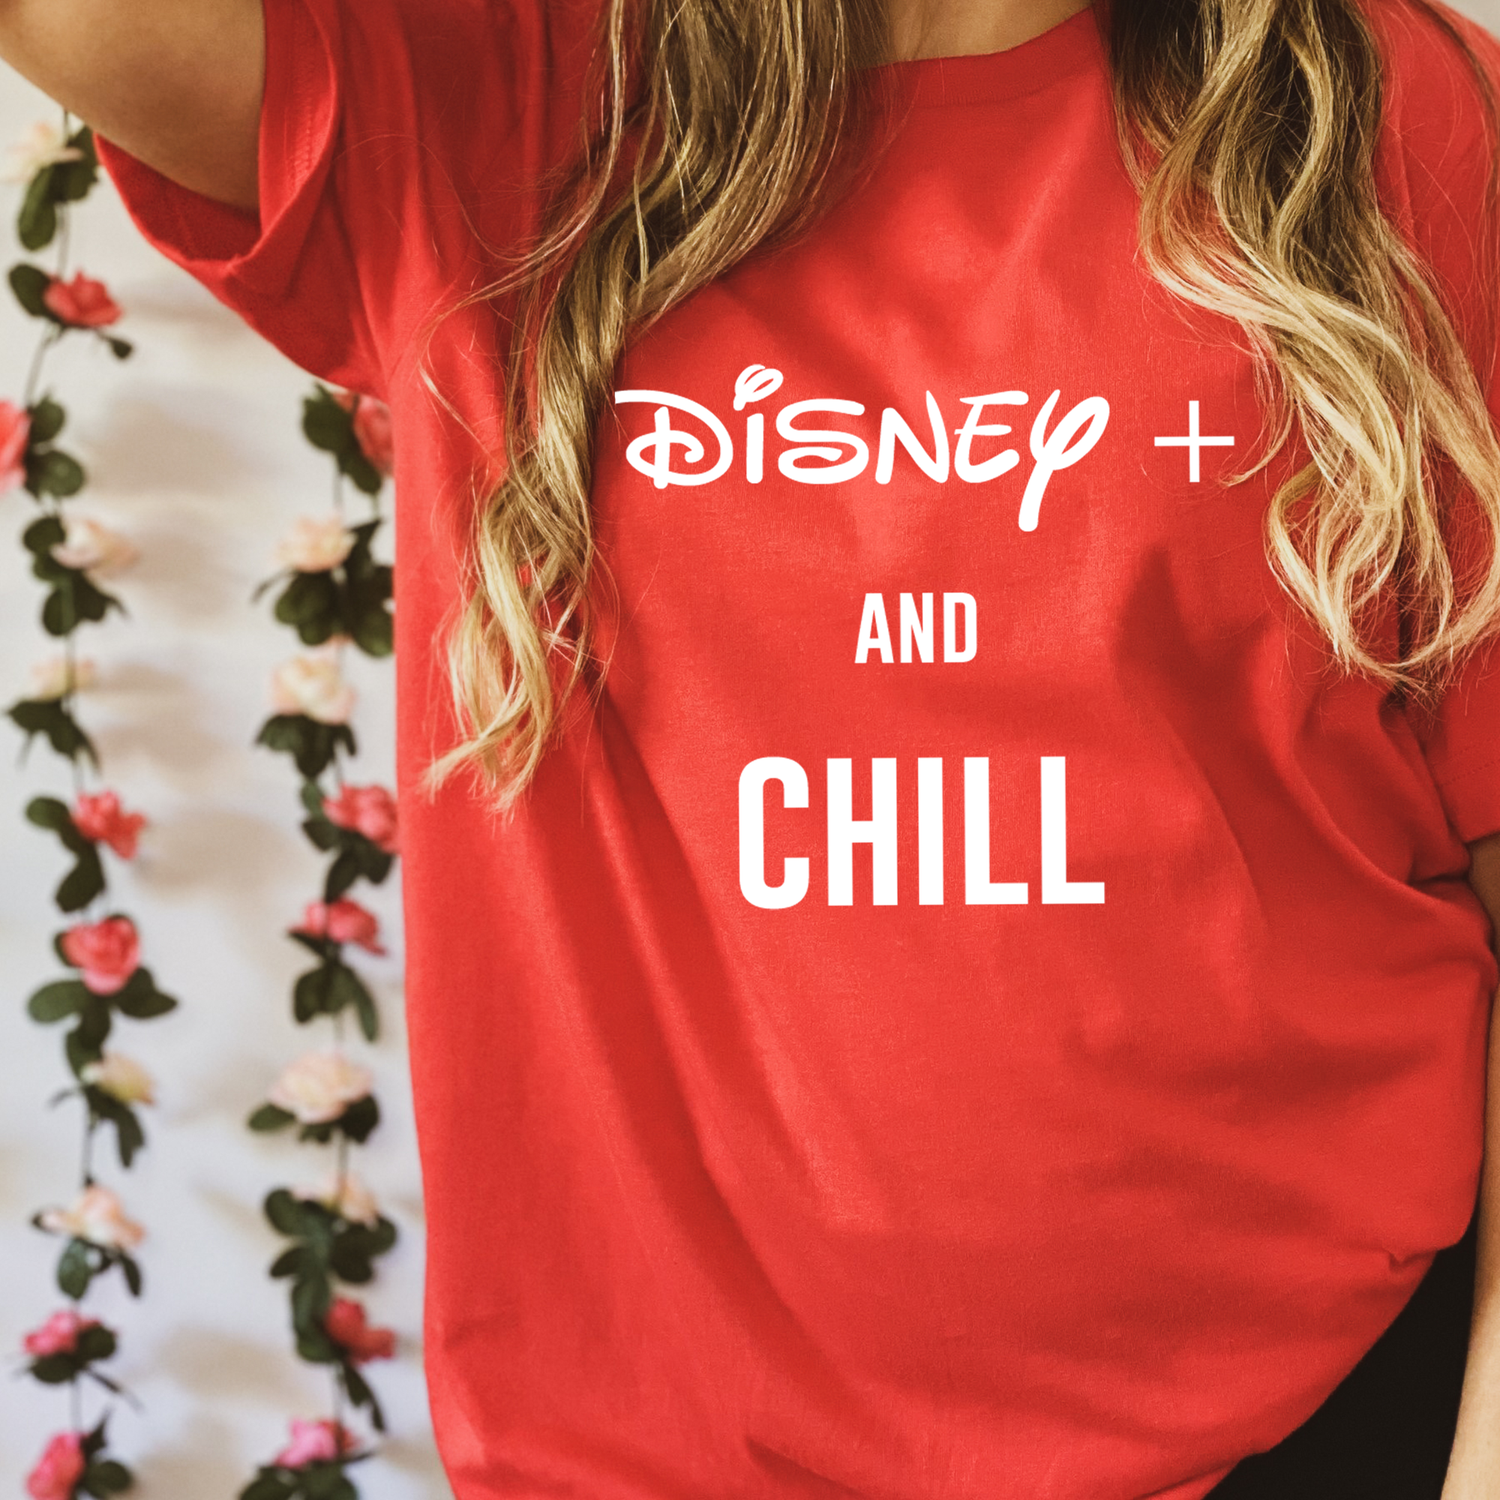 Disney and Chill - Royal Tees Designs